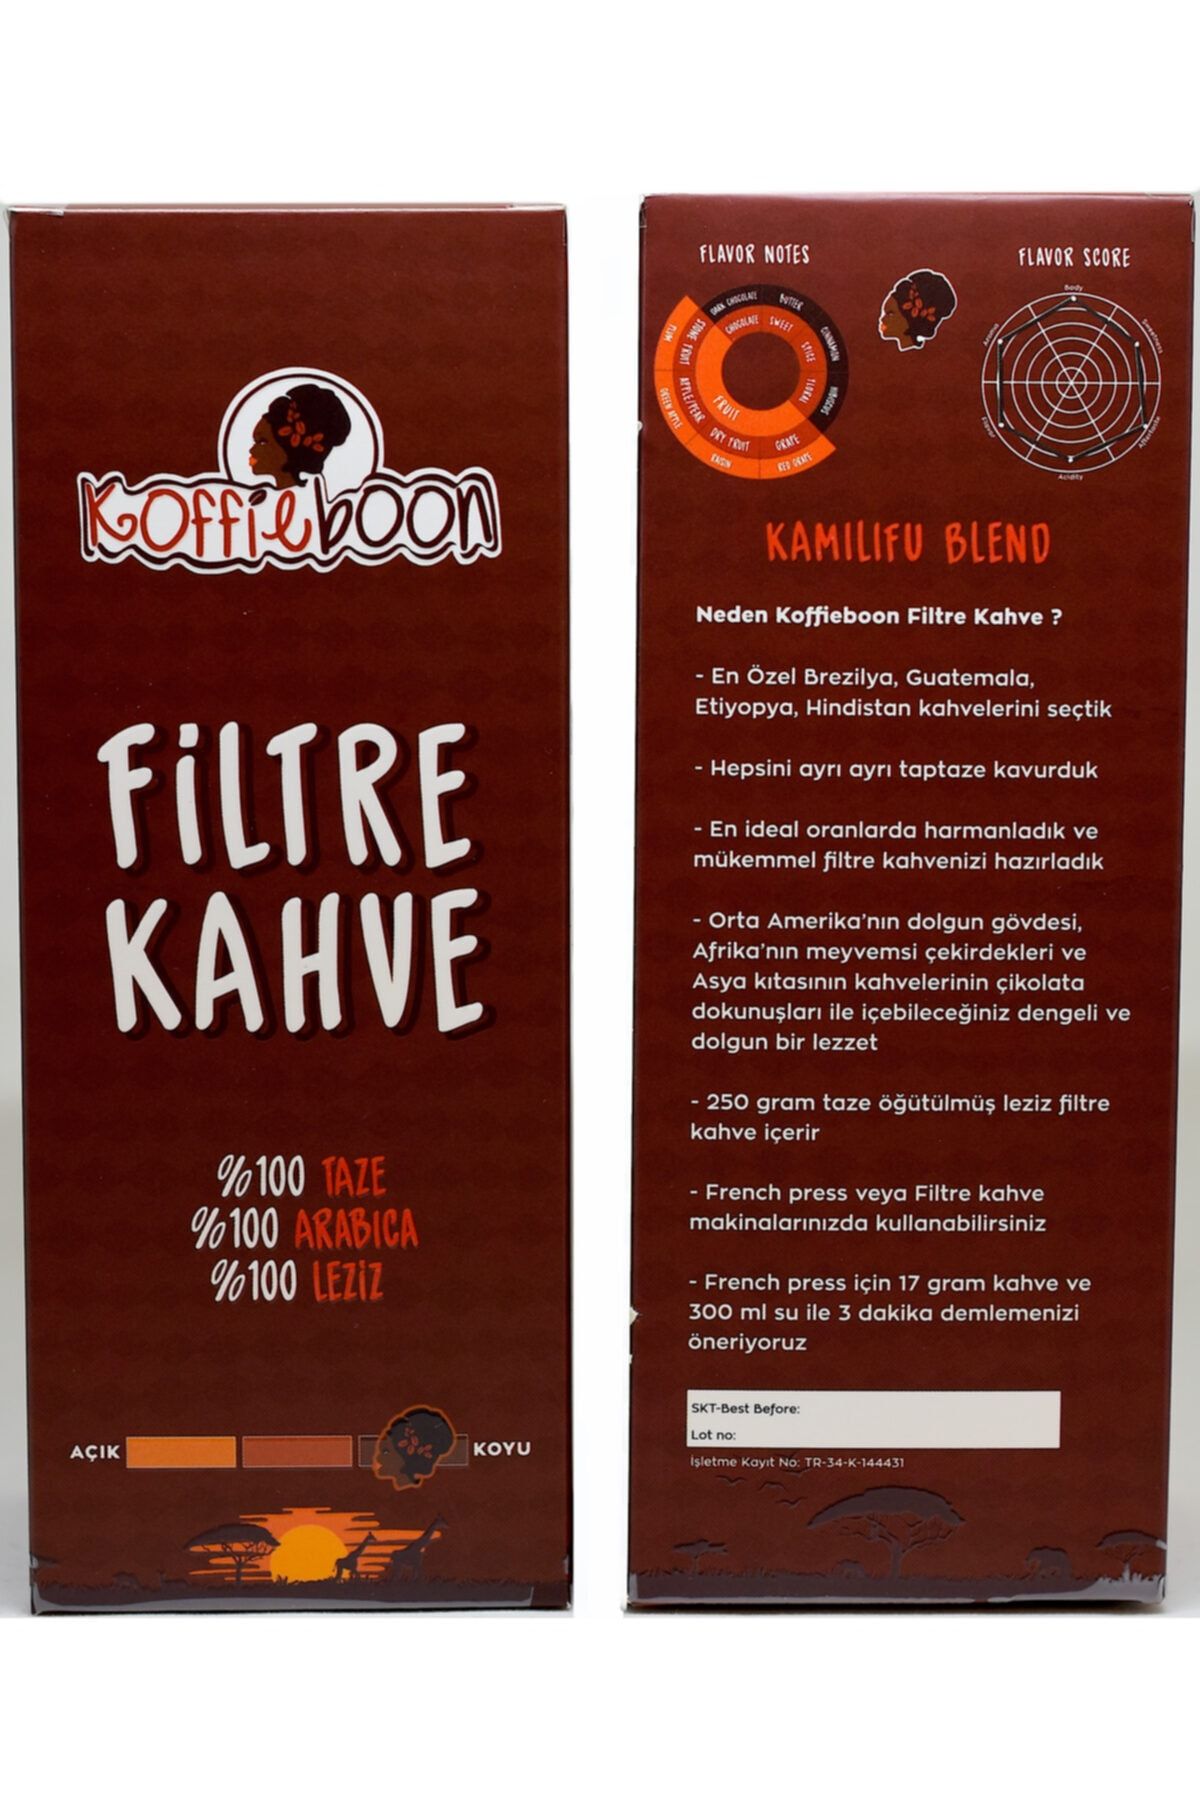 KOFFIEBOON Koyu Filtre Kahve- Koyu Kavrulmuş - Kamilifu Blend- 1 Kg - 4 X 250 gr